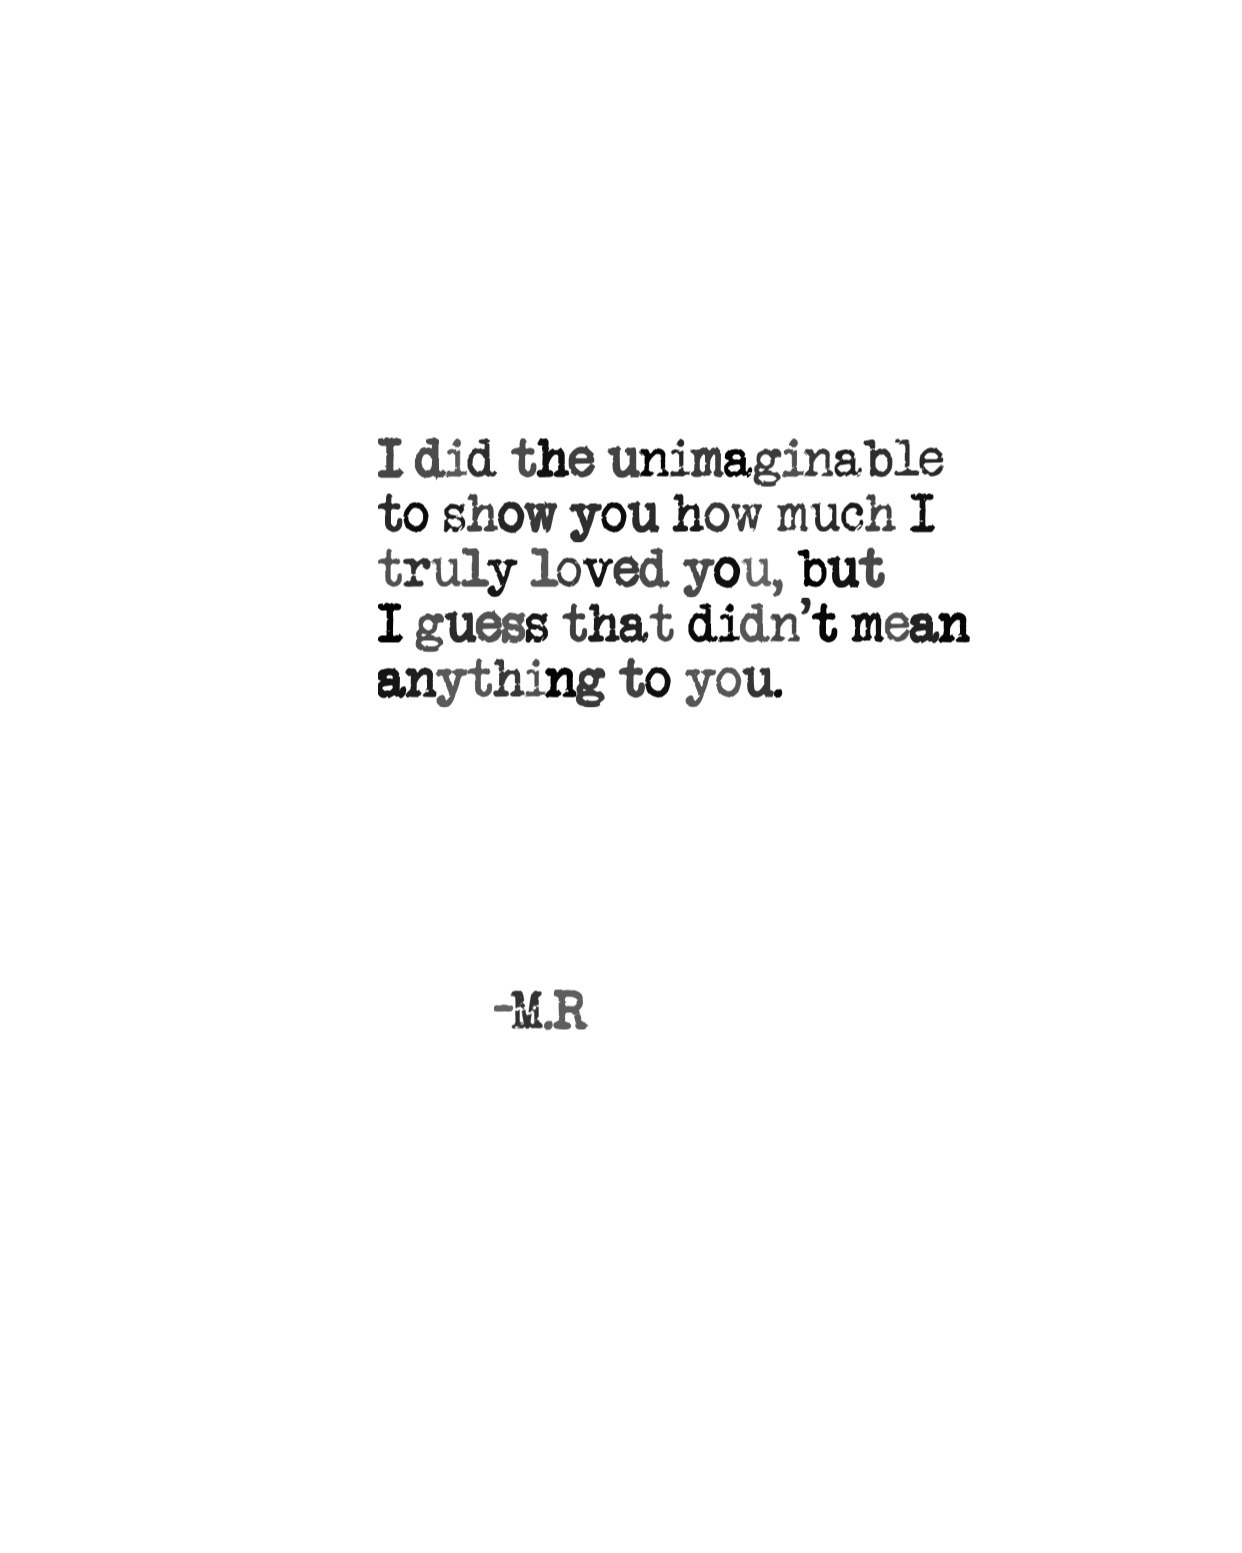 tumblr quotes love sadness